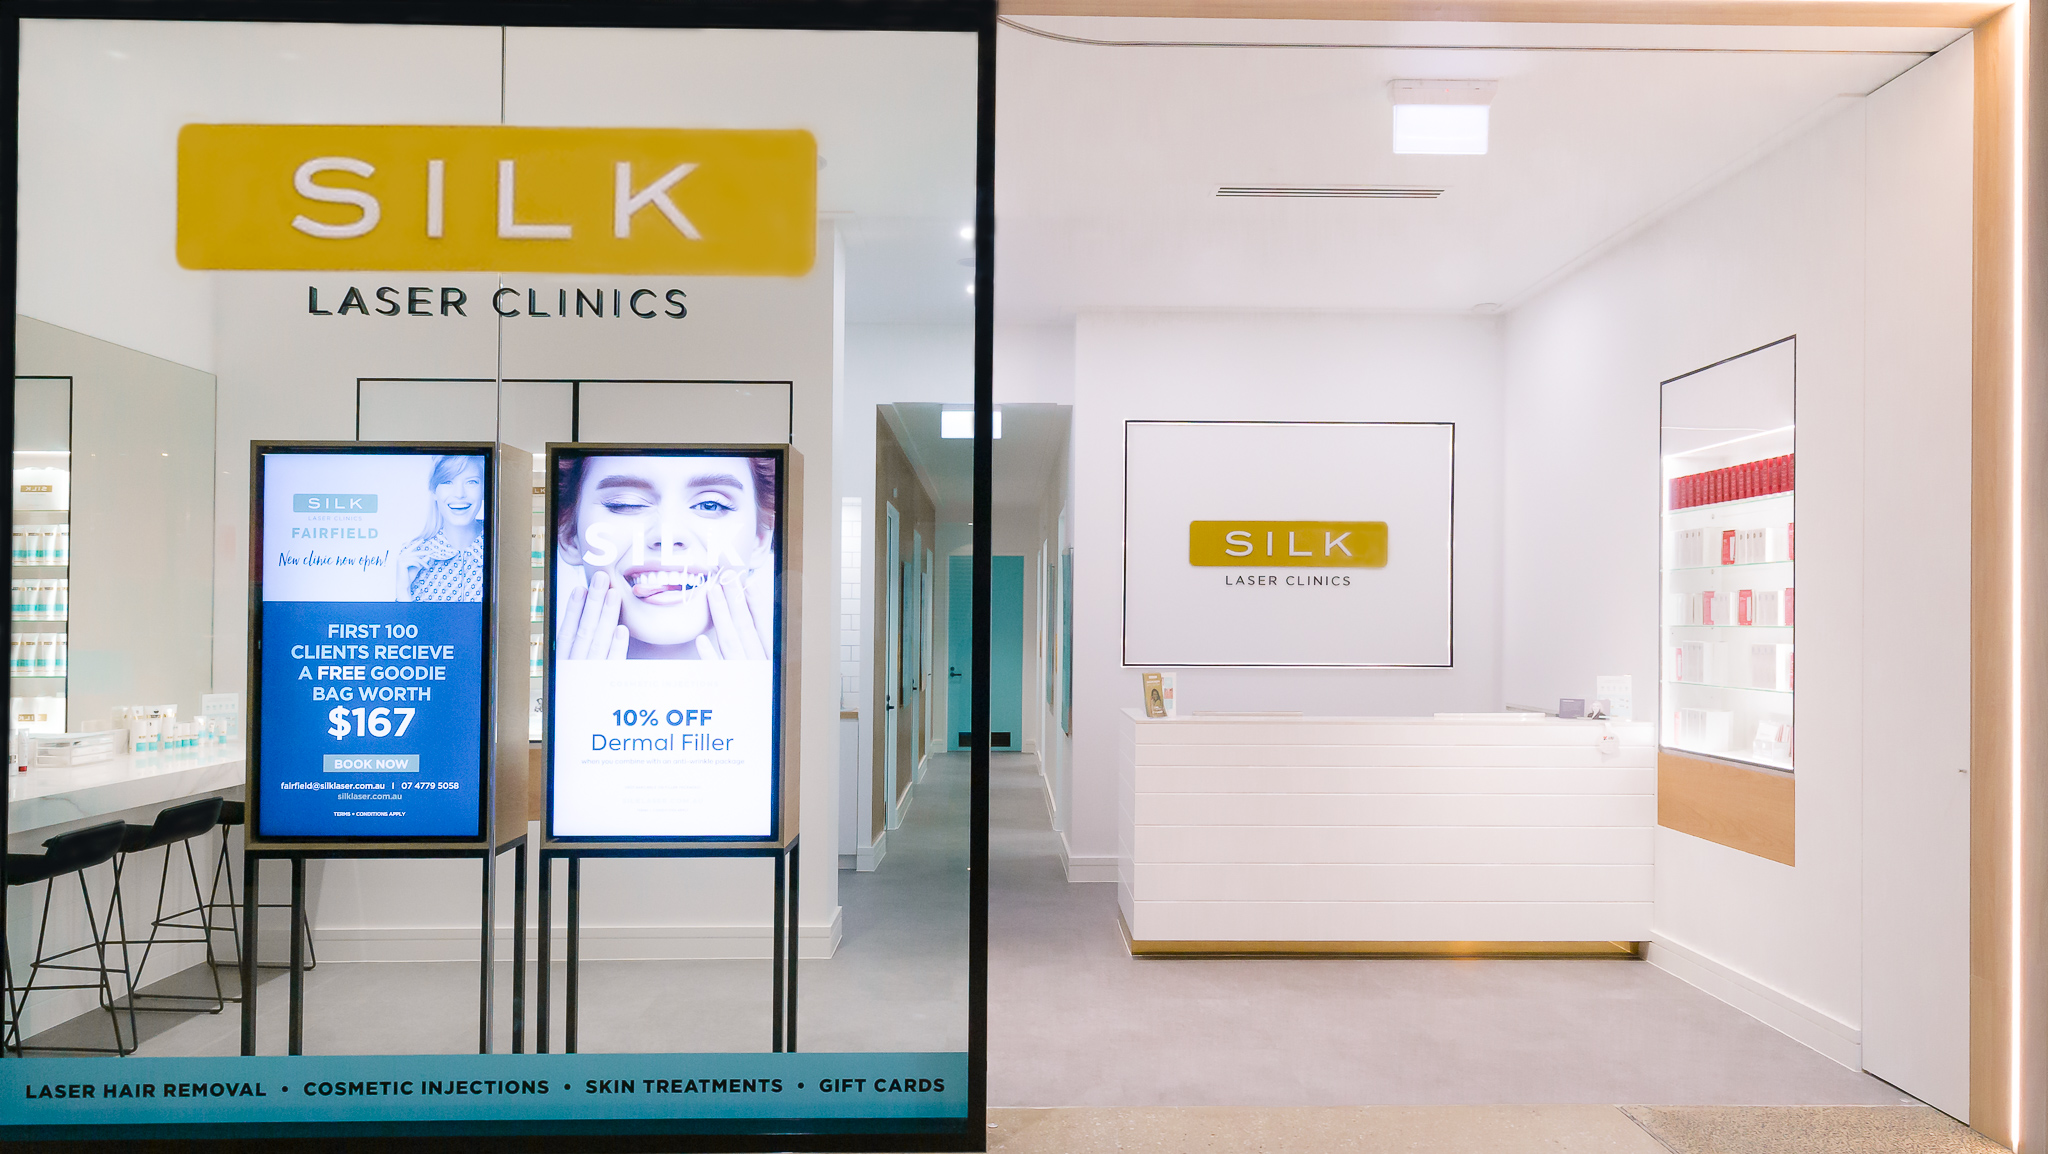 SILK-Laser-Clinics